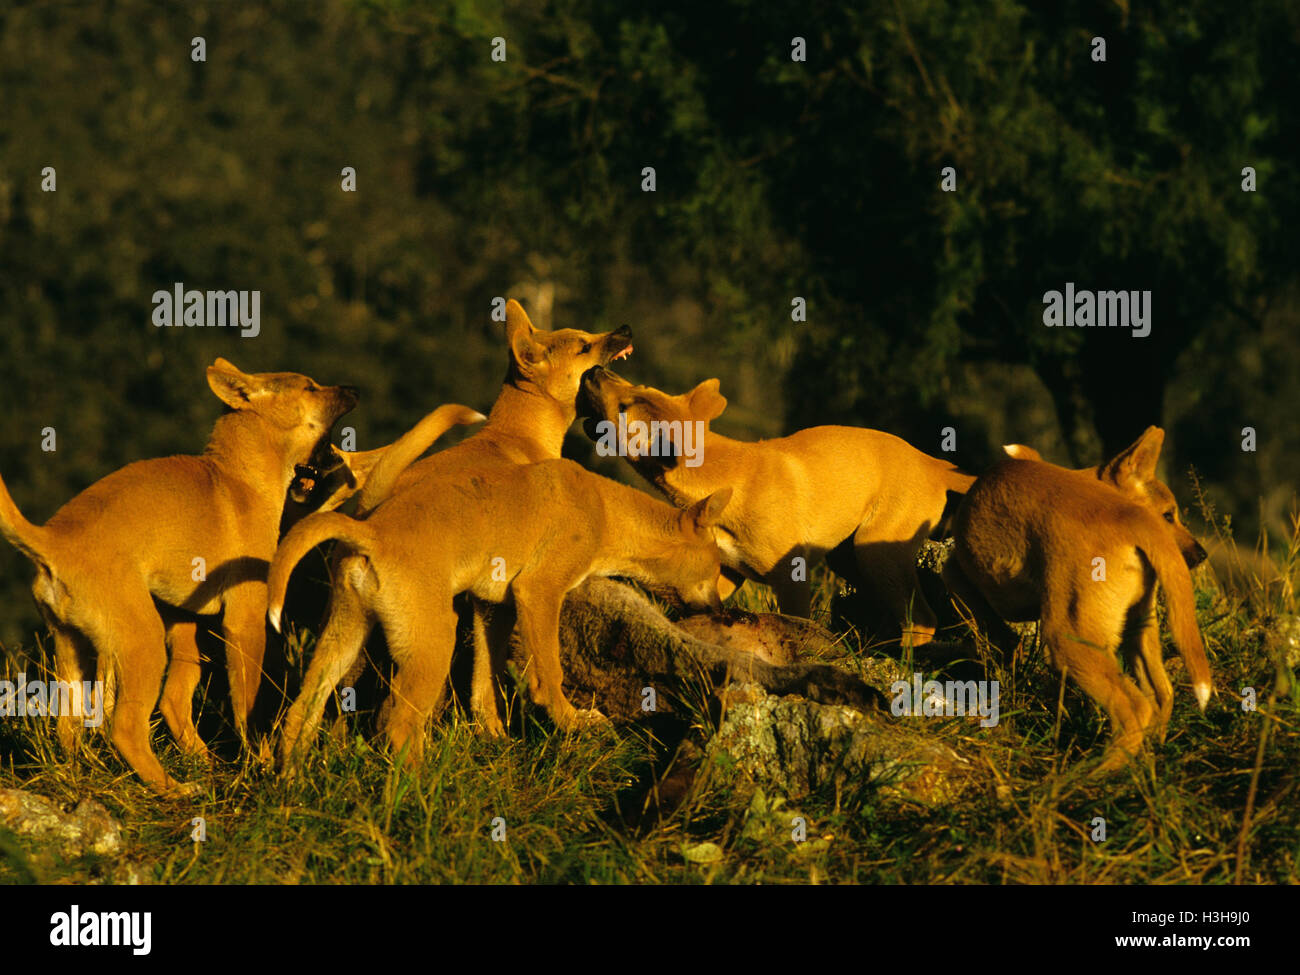 Dingo (Canis dingo) Stock Photo